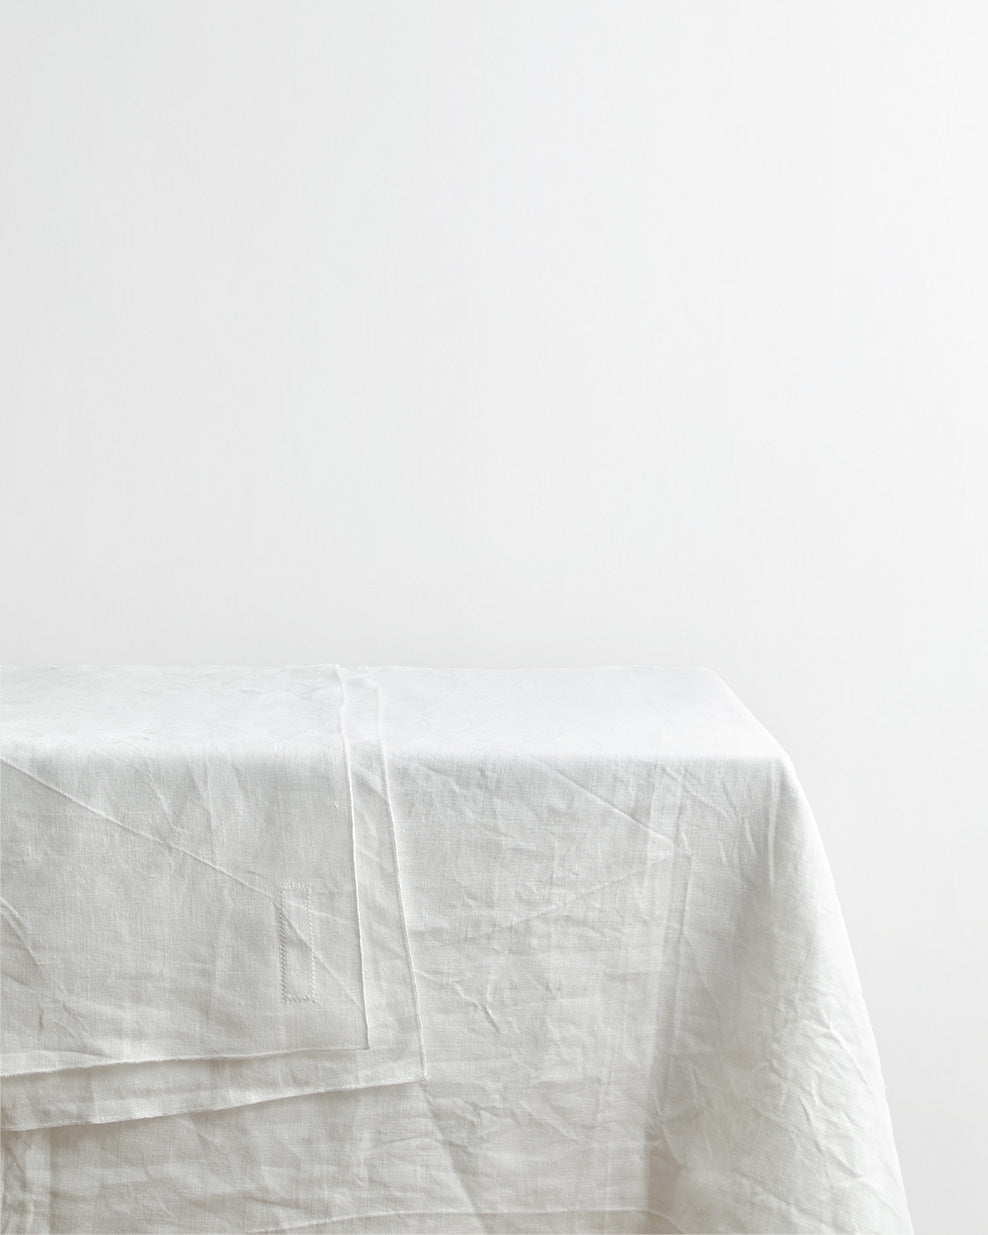 White Linen Tablecloth with White Edge Trim